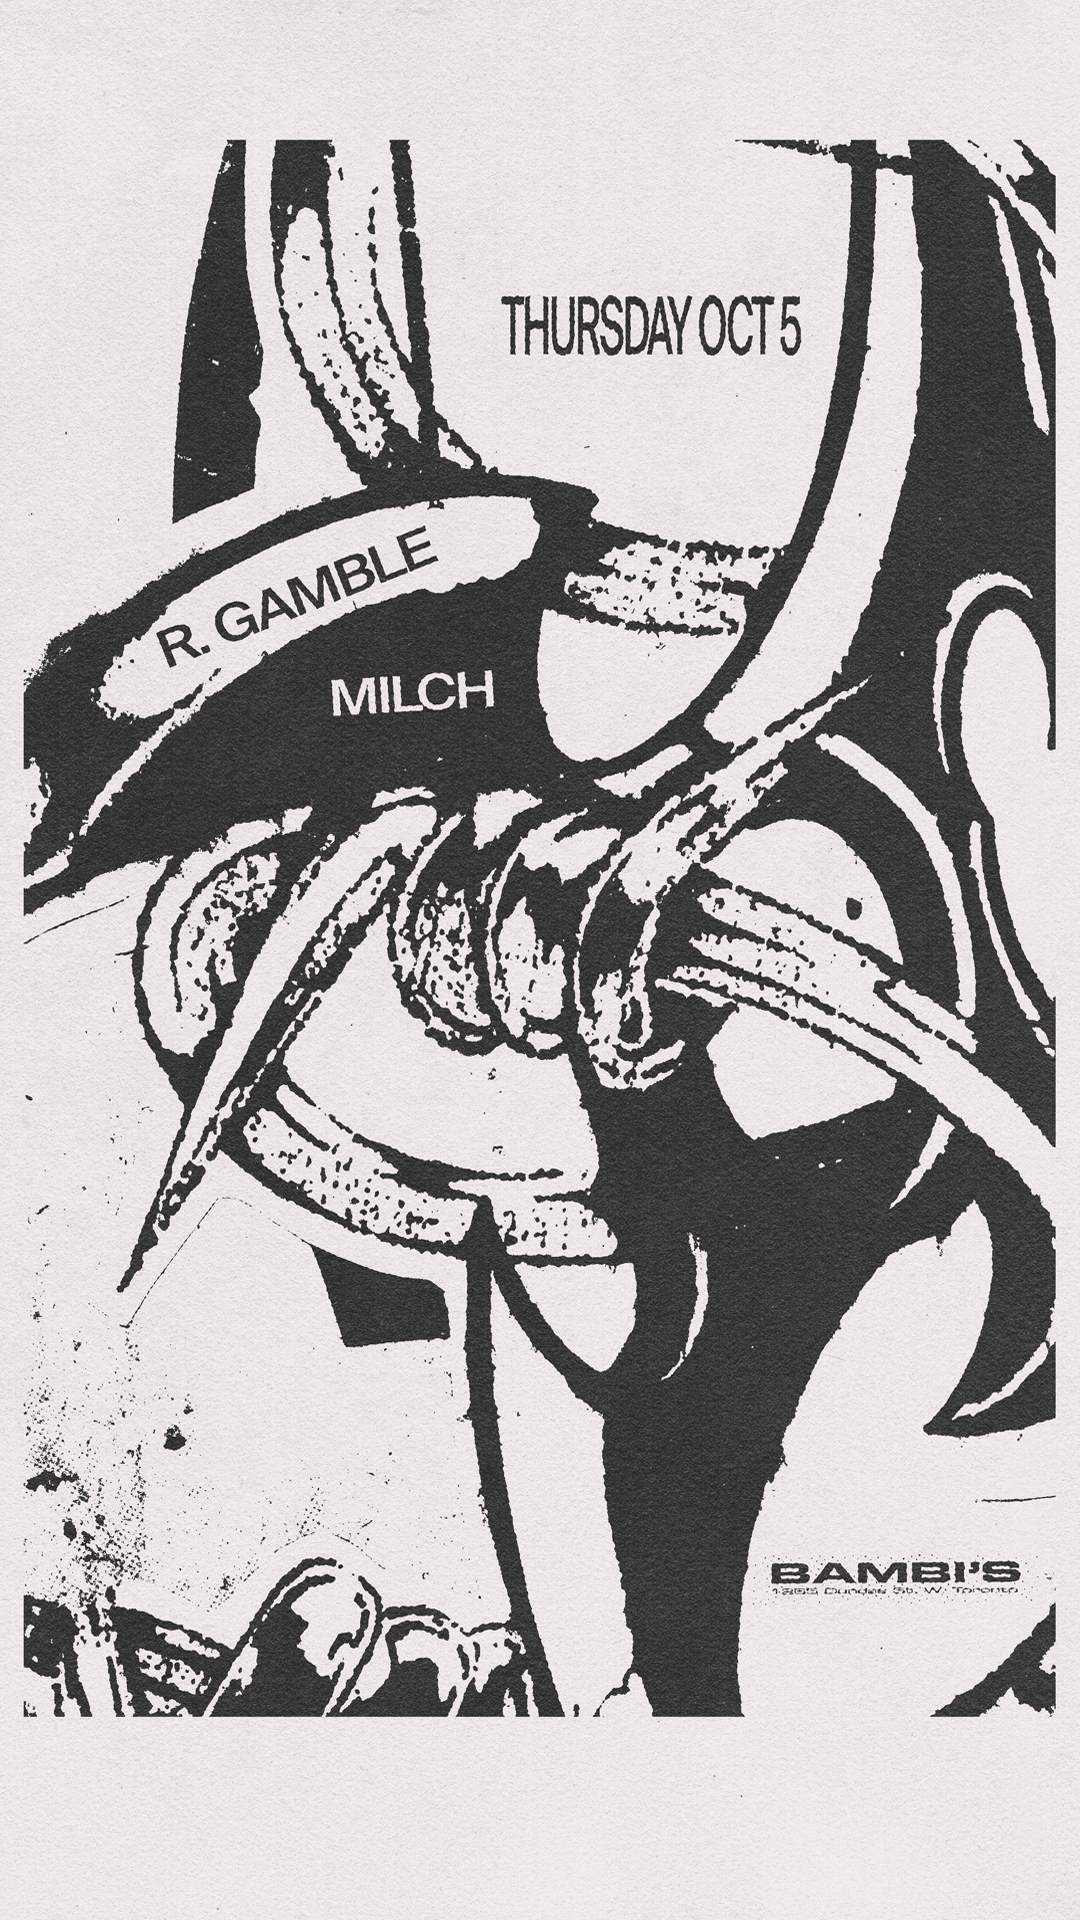 R Gamble & Milch - フライヤー表